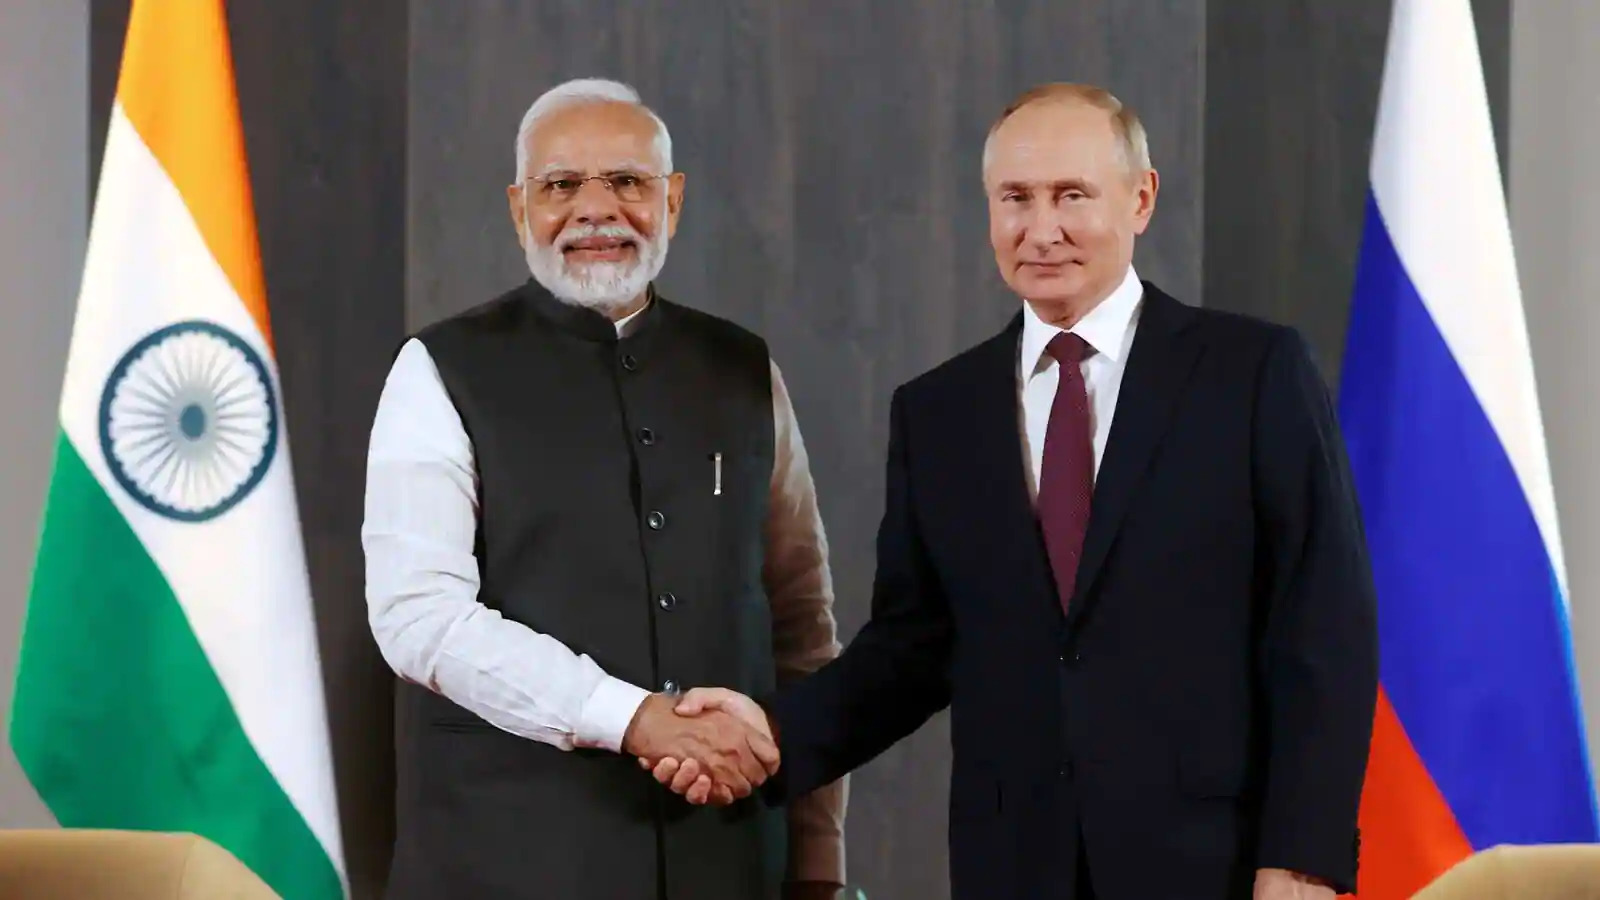 Russian President Vladimir Putin will attend India's G20 Summit in 2023